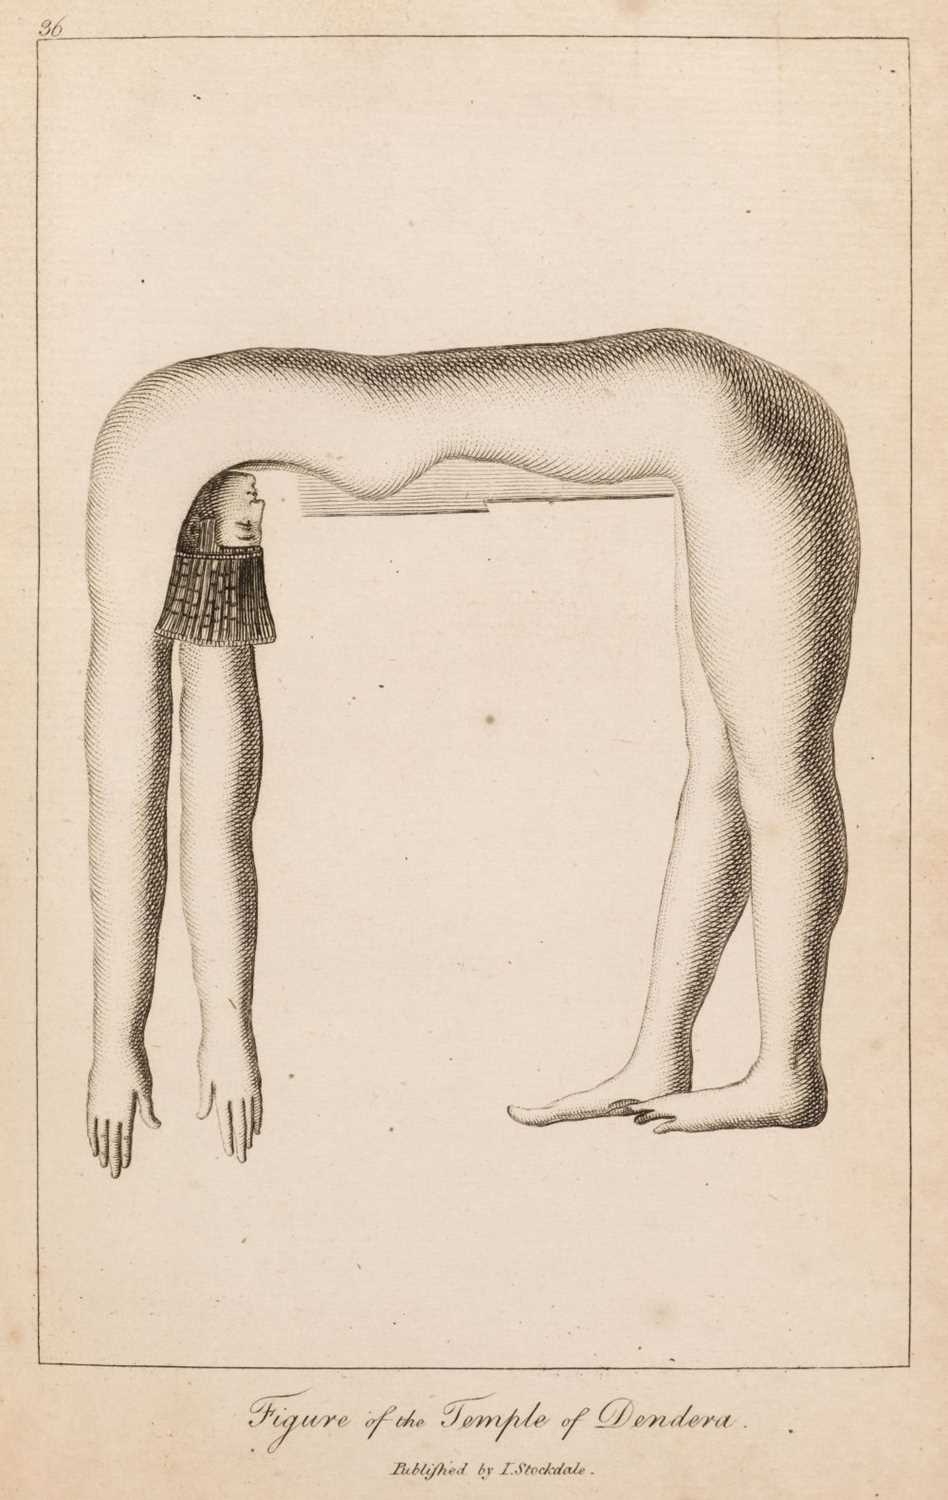 Lot 39 - Sonnini (Charles Nicolas Sigisbert). Travels in Upper and Lower Egypt, 2 vols, 1799